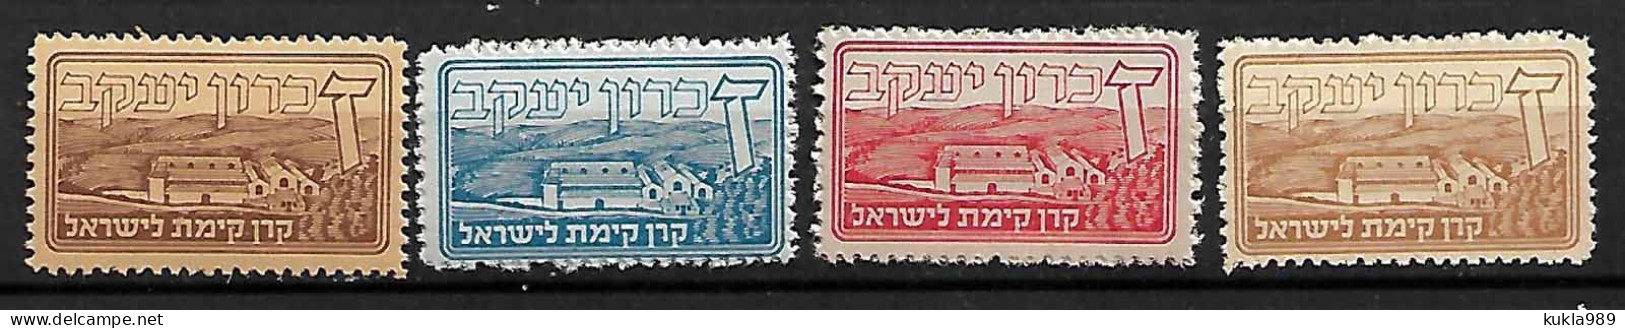 JUDAICA KKL JNF STAMPS 1948 HEBREW ALPHABET "ZAYIN" MNH - Collections, Lots & Series